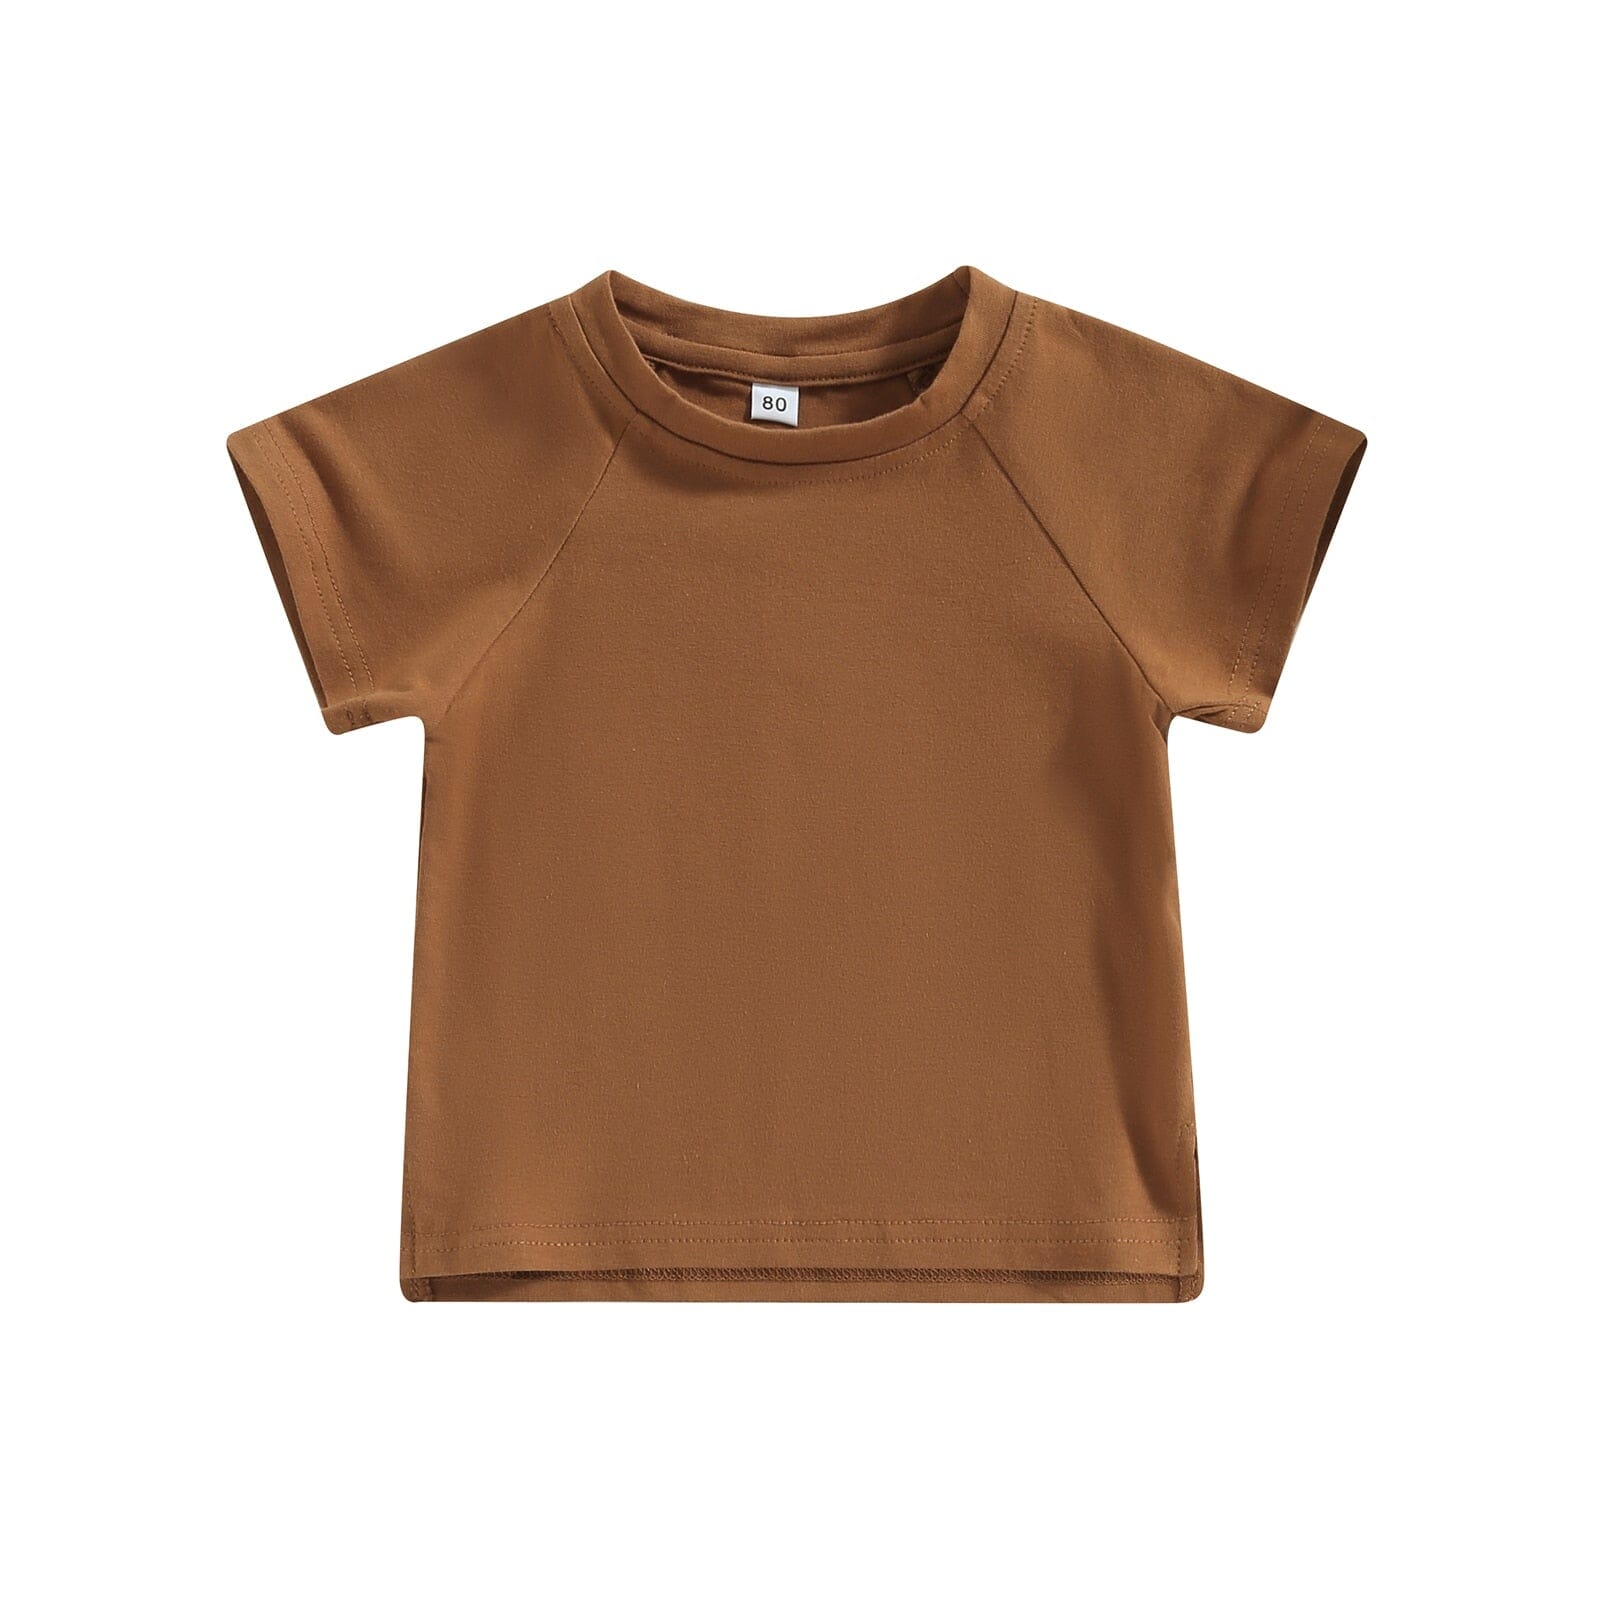 Camiseta Infantil Minimalista Loja Click Certo Marrom 2-3 Anos 